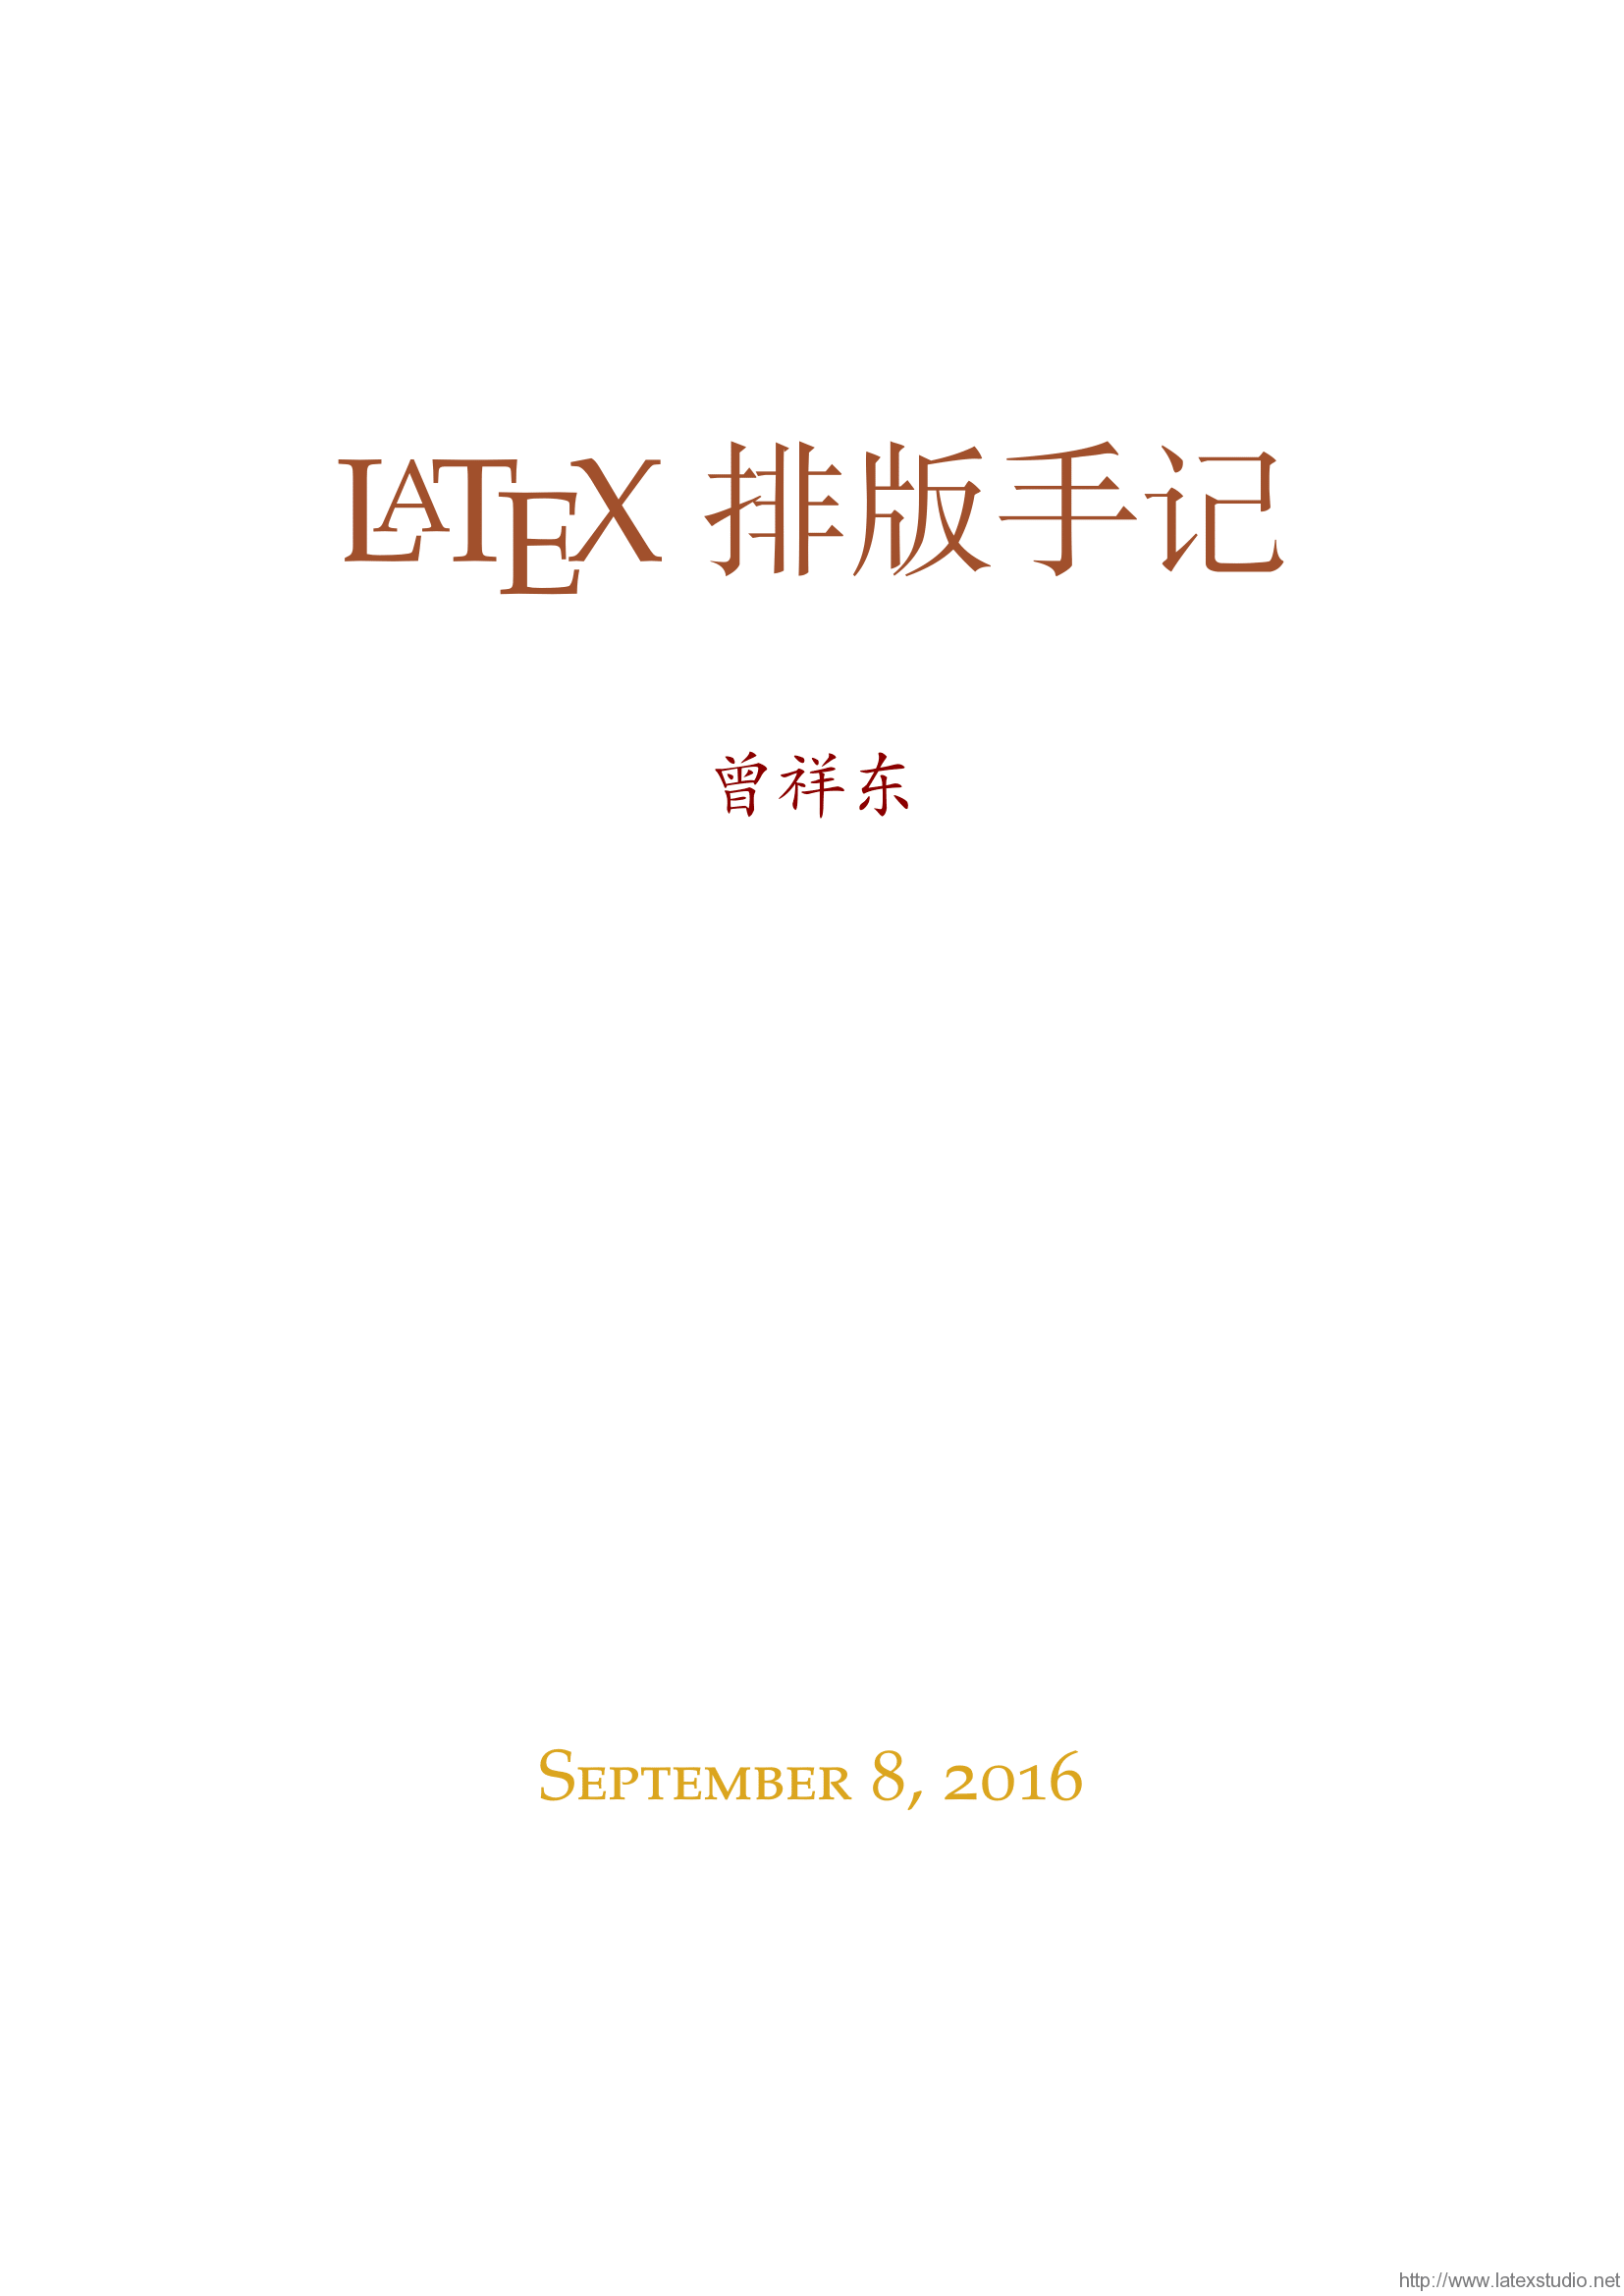 latex_note-02